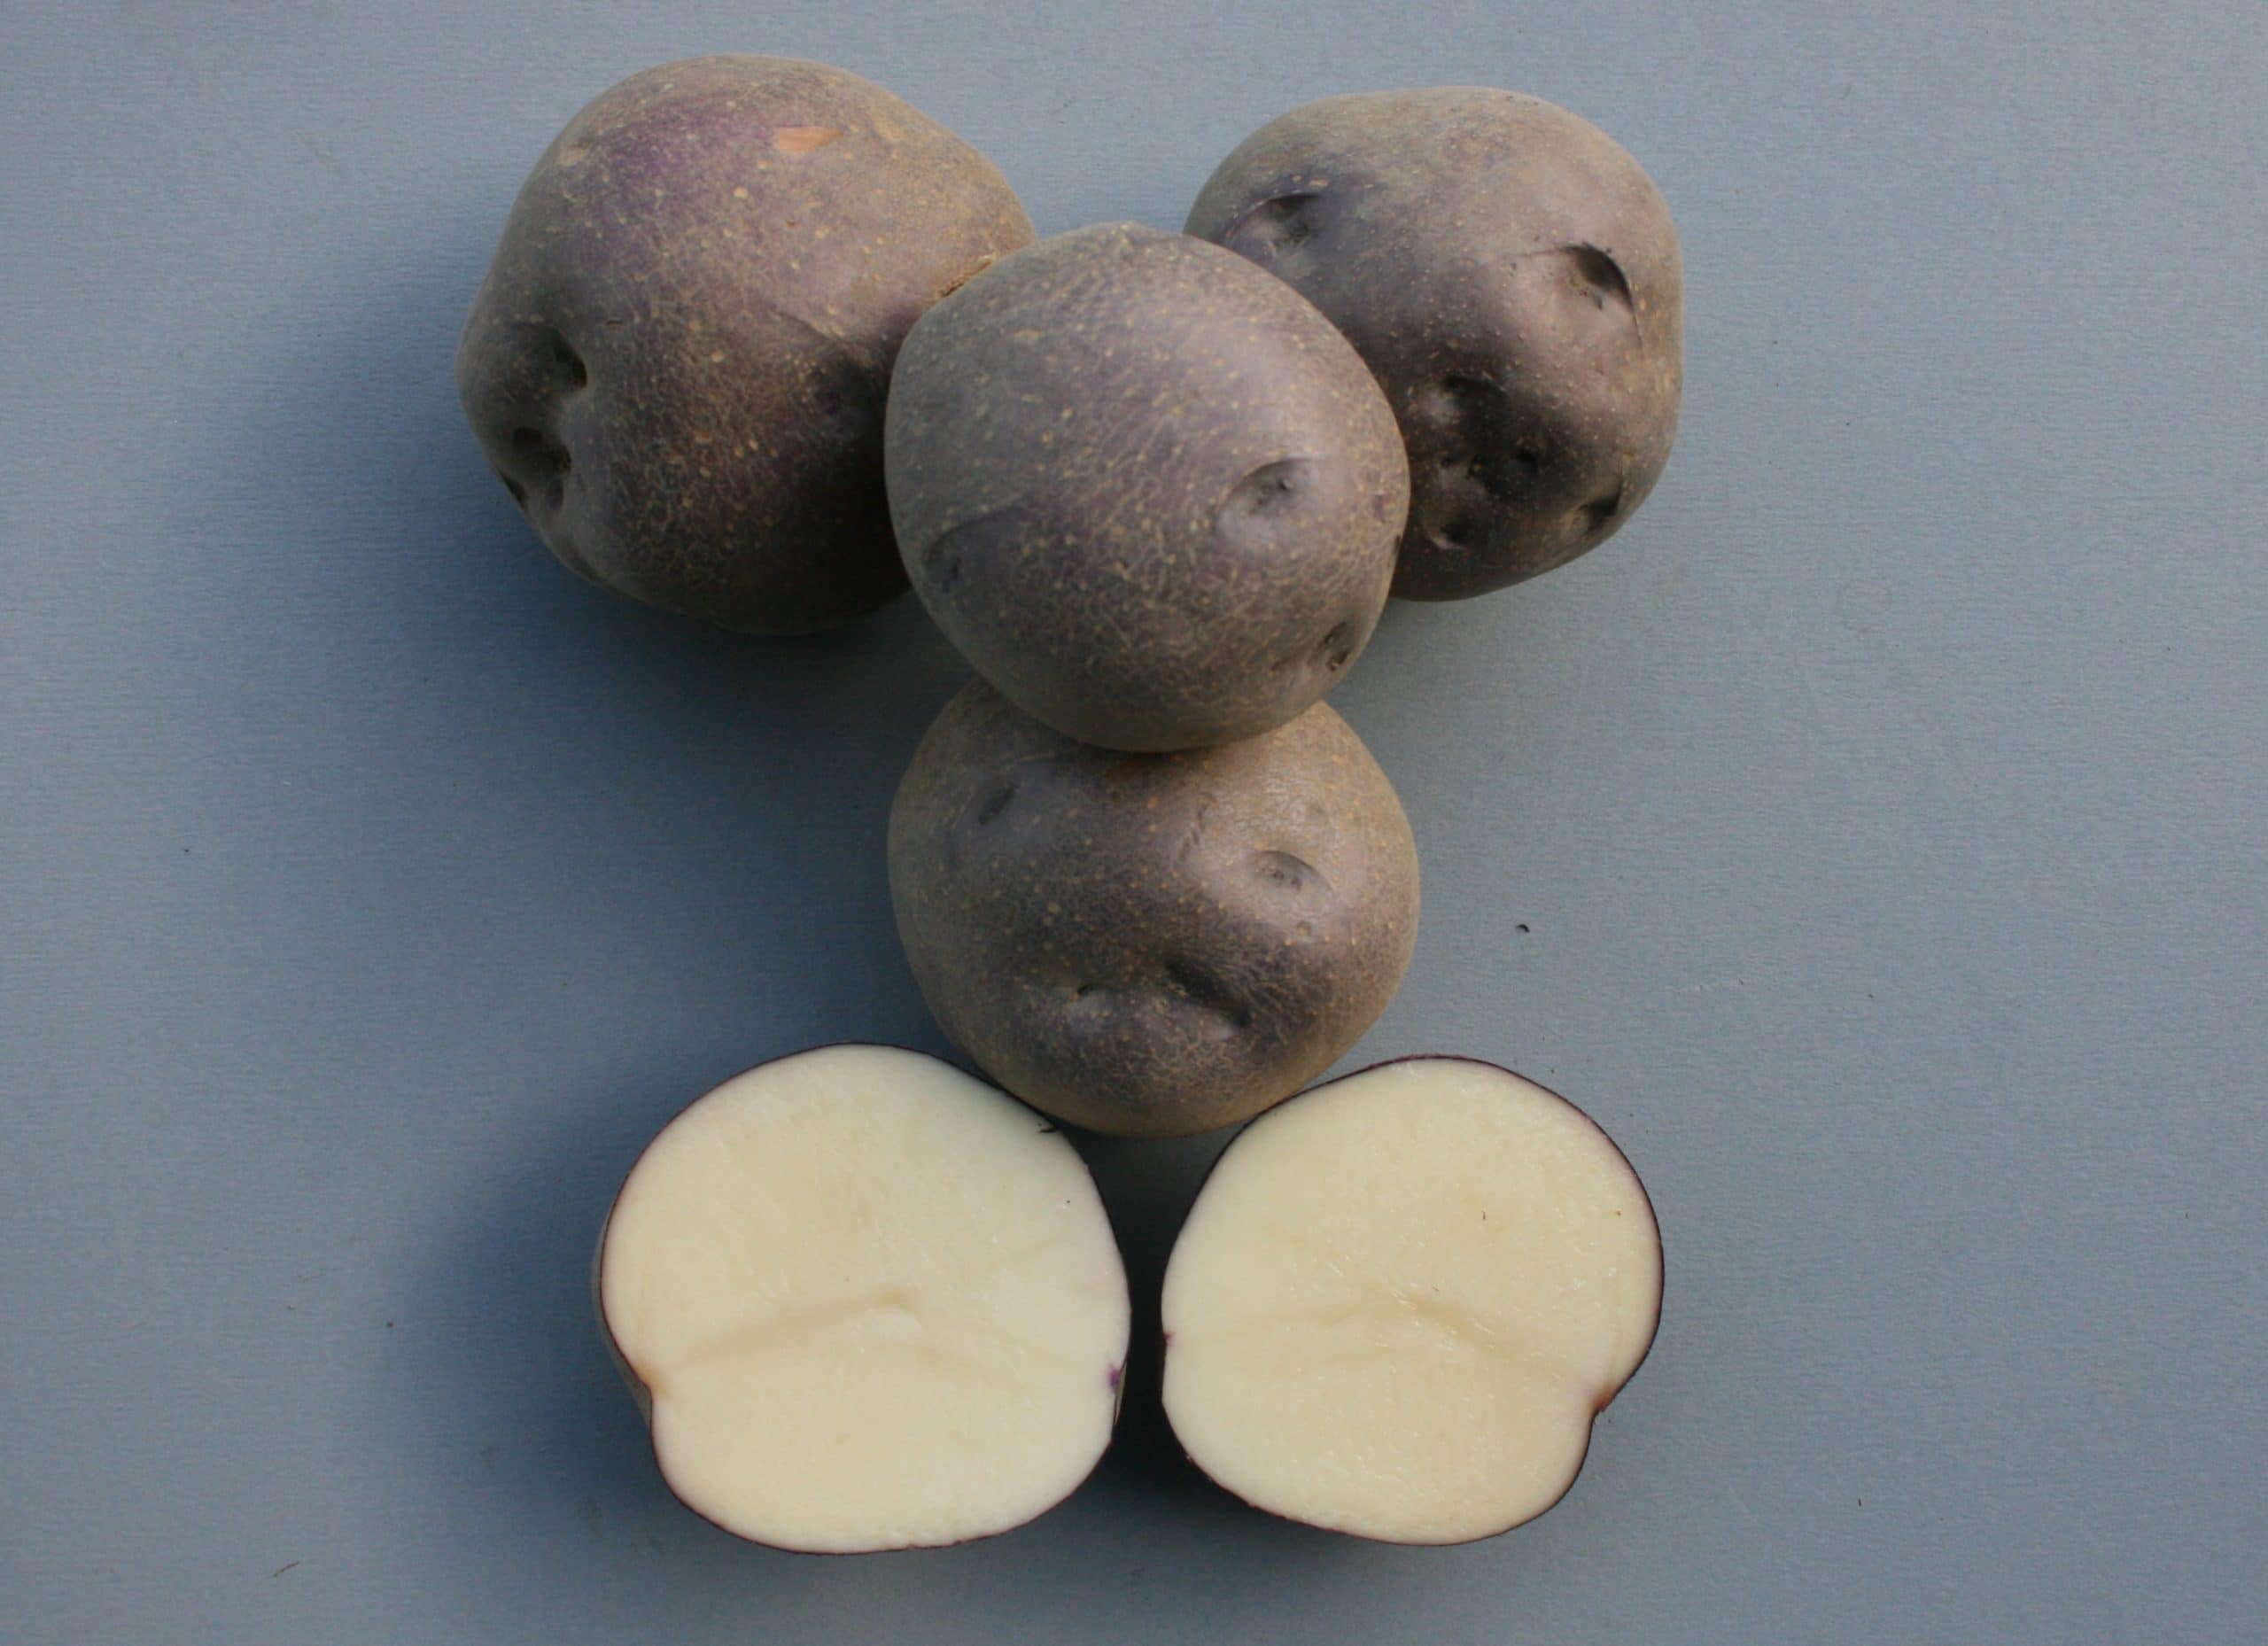 AAC Madam Blue potato variety